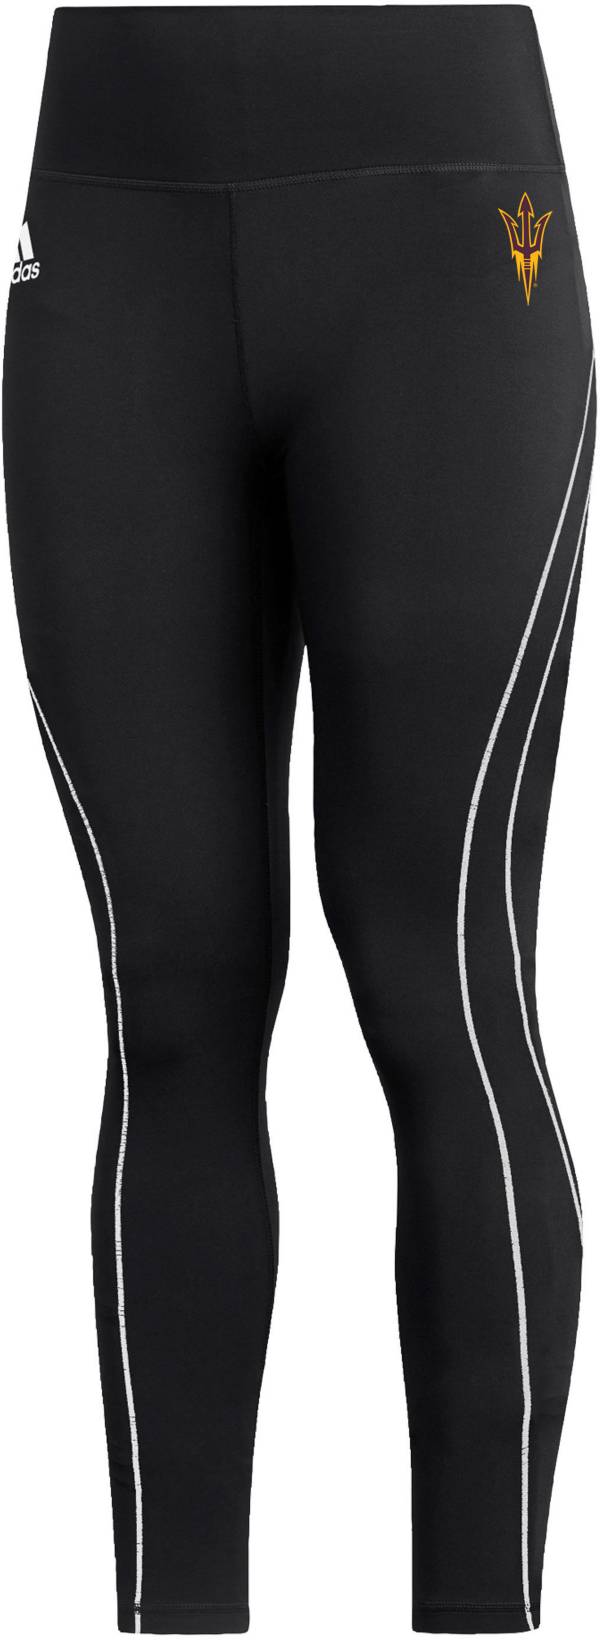 adidas Designed for Training Yoga Training 7/8 Pants - Black, Men's Yoga